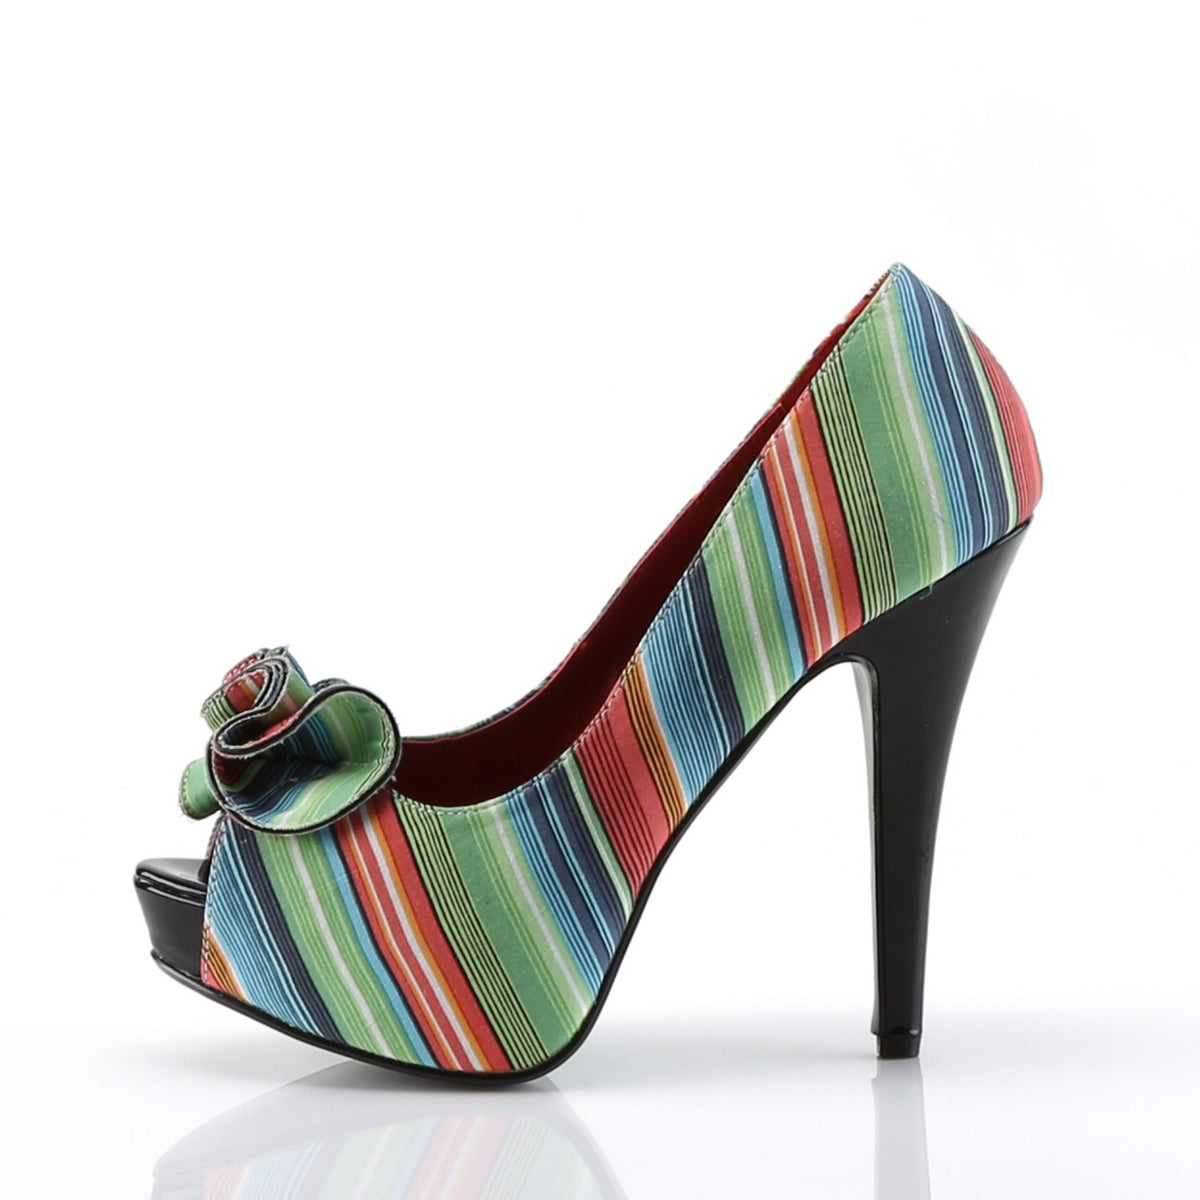 LOLITA-12 Pin Up Couture Serape Print Fabric Platforms [Retro Glamour Shoes]